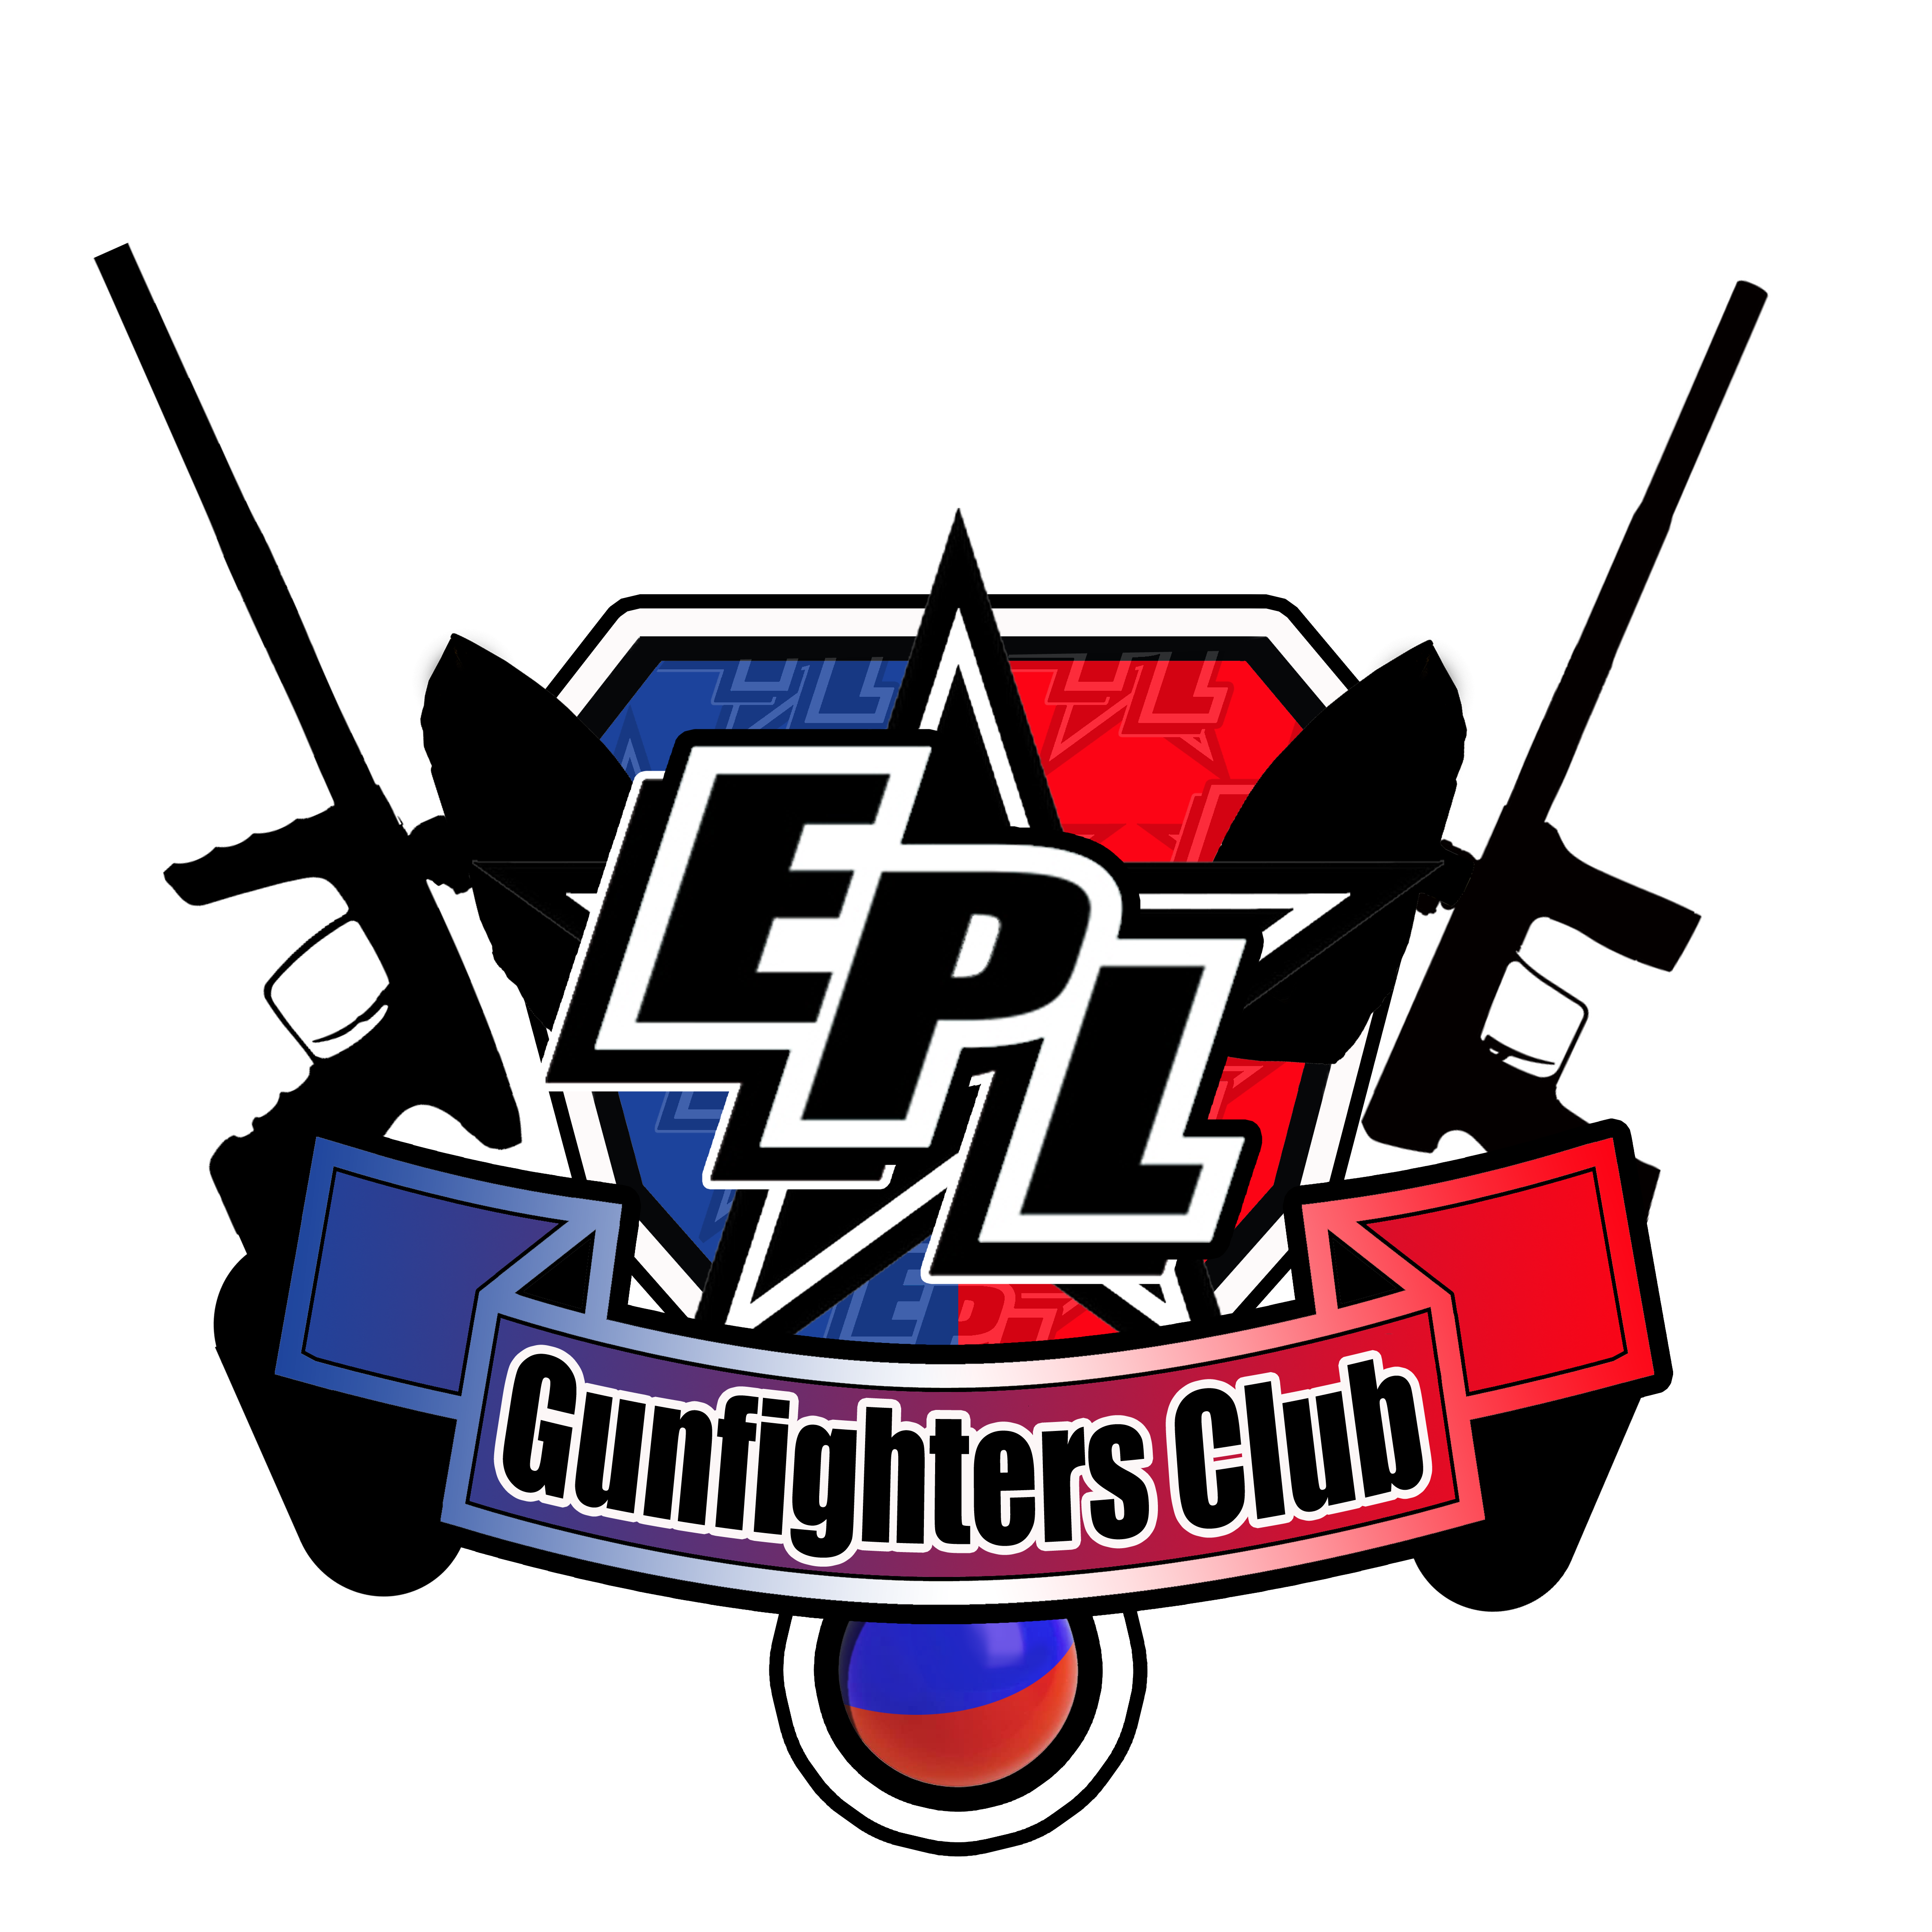 EPL Gunfighters Club